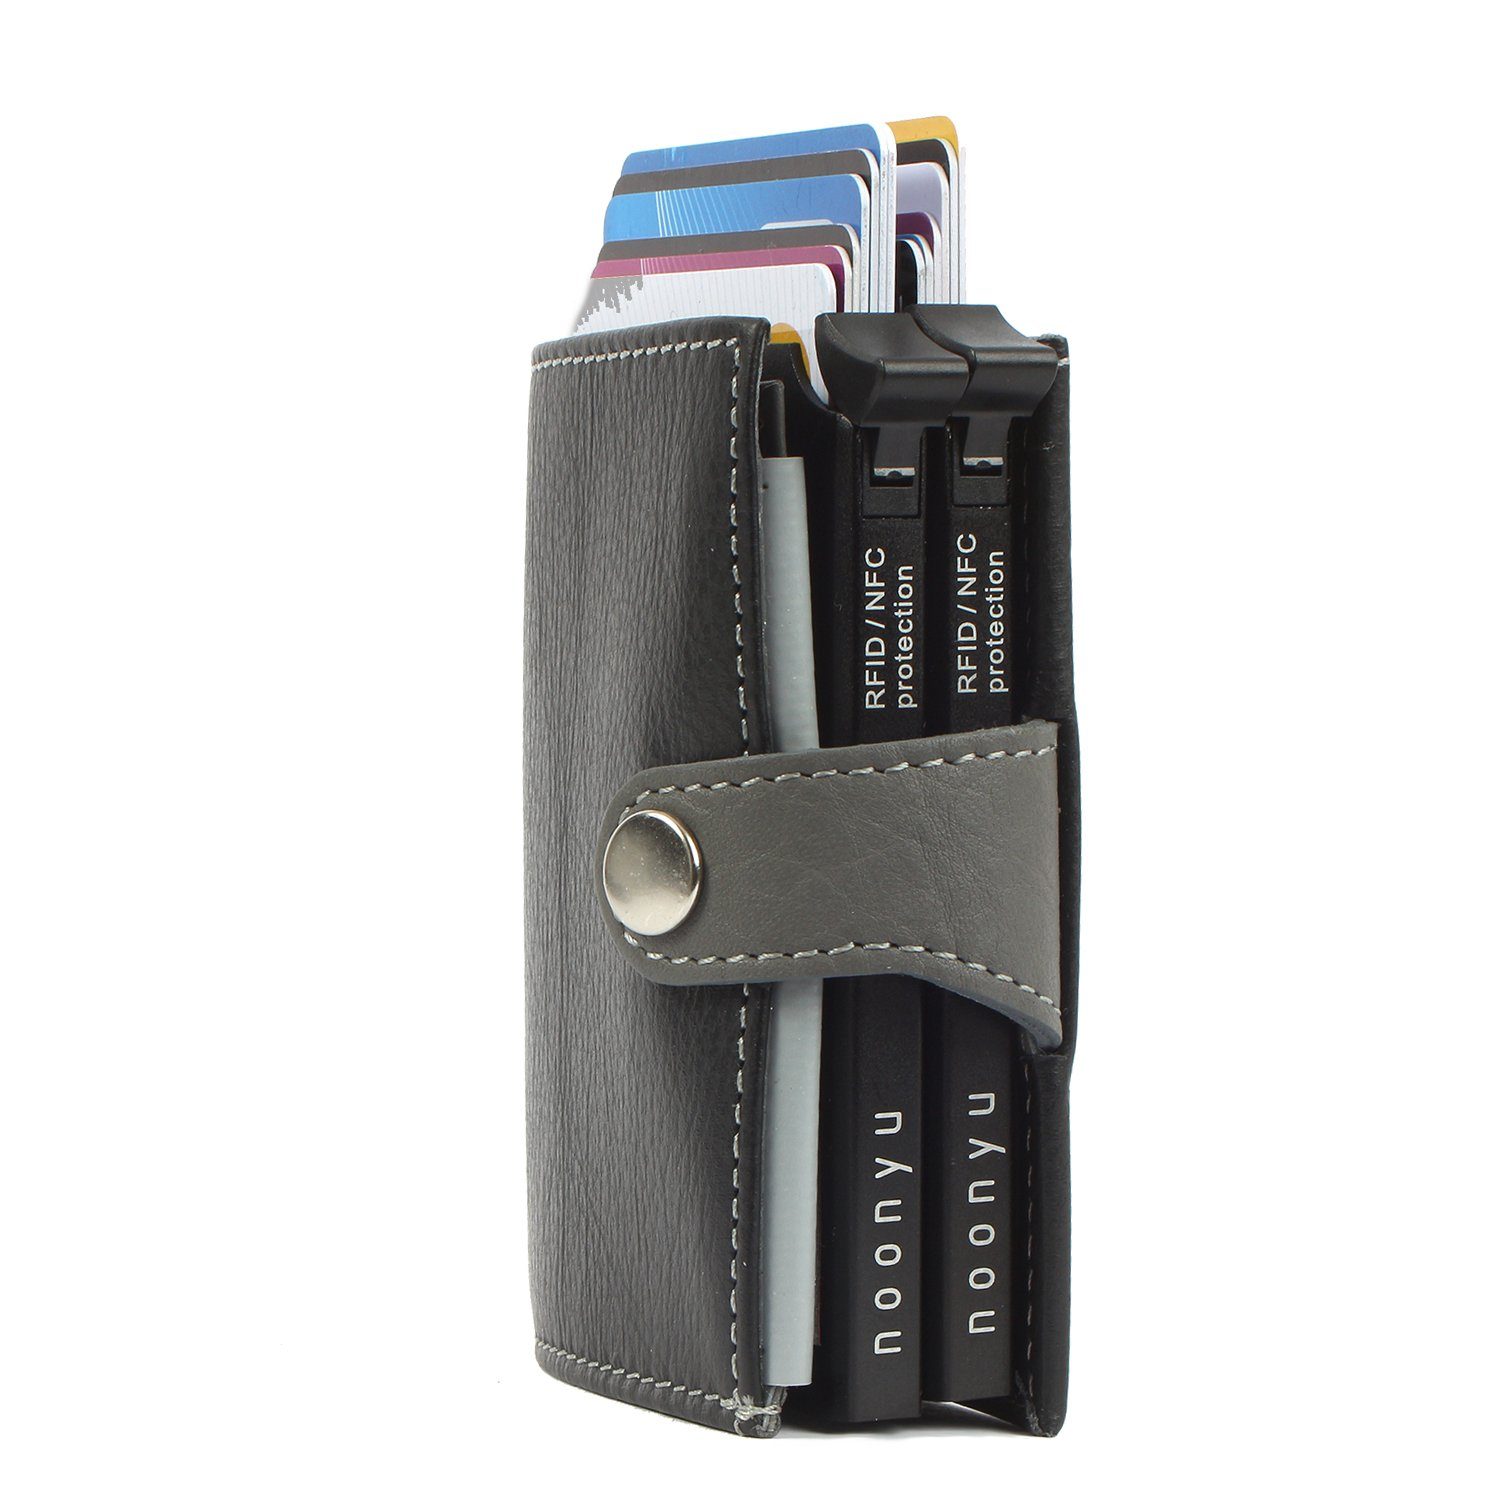 Margelisch Mini Geldbörse noonyu double aus Upcycling Leder black RFID leather, Kreditkartenbörse